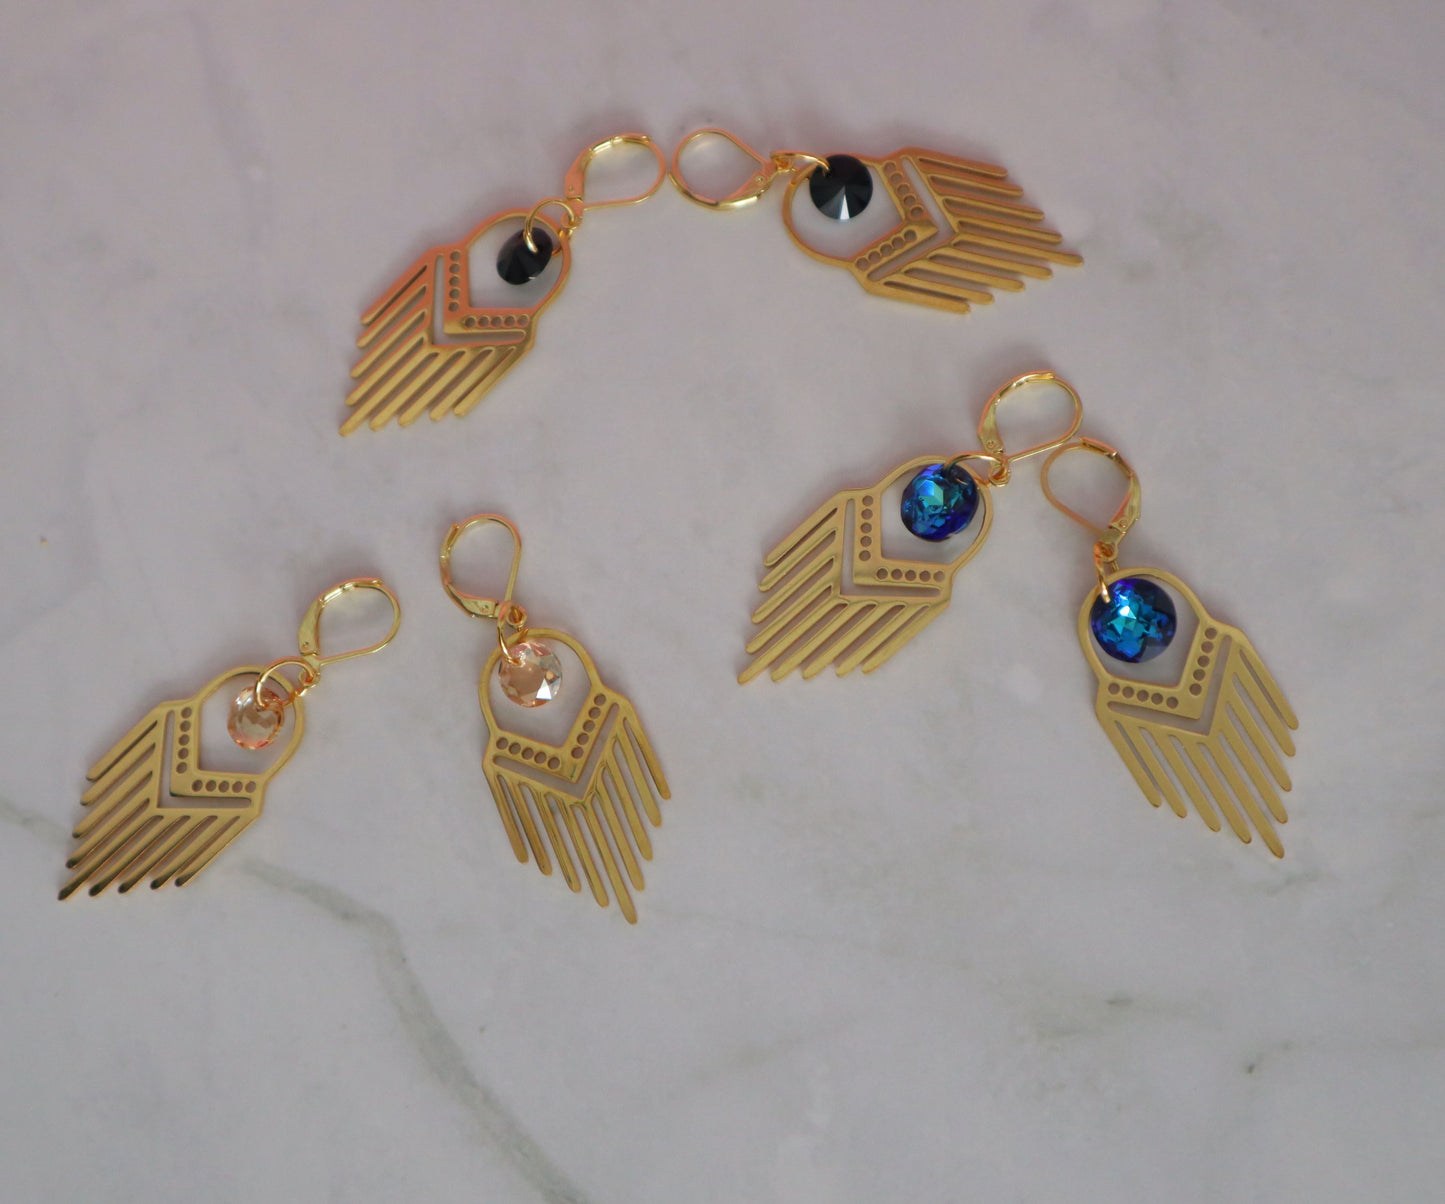 Tenique Designs Stainless Steel Dreamcatcher earrings, Wesley Chapel Jewelry Designer